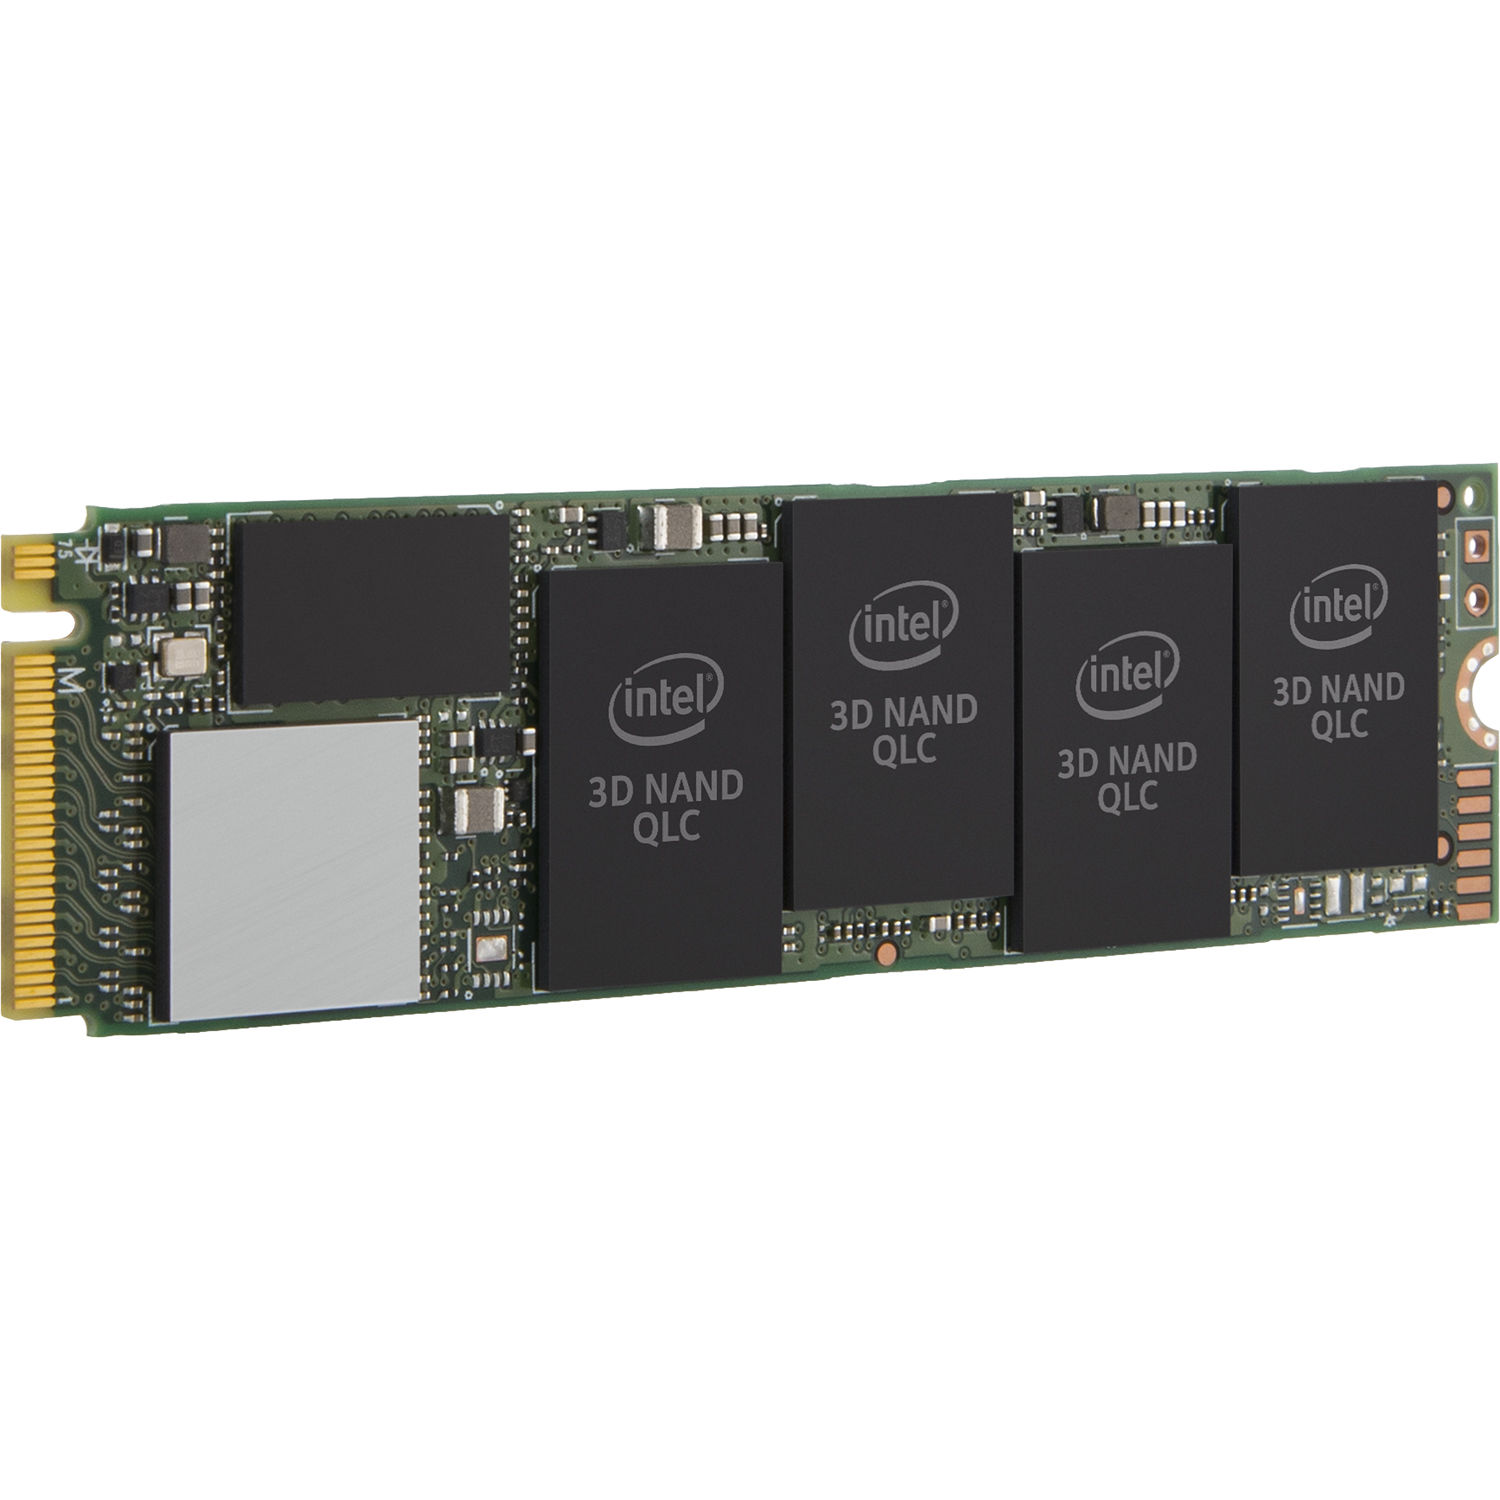 Intel 1tb 660p Nvme M 2 Internal Ssd Ssdpeknw010t8x1 B H Photo